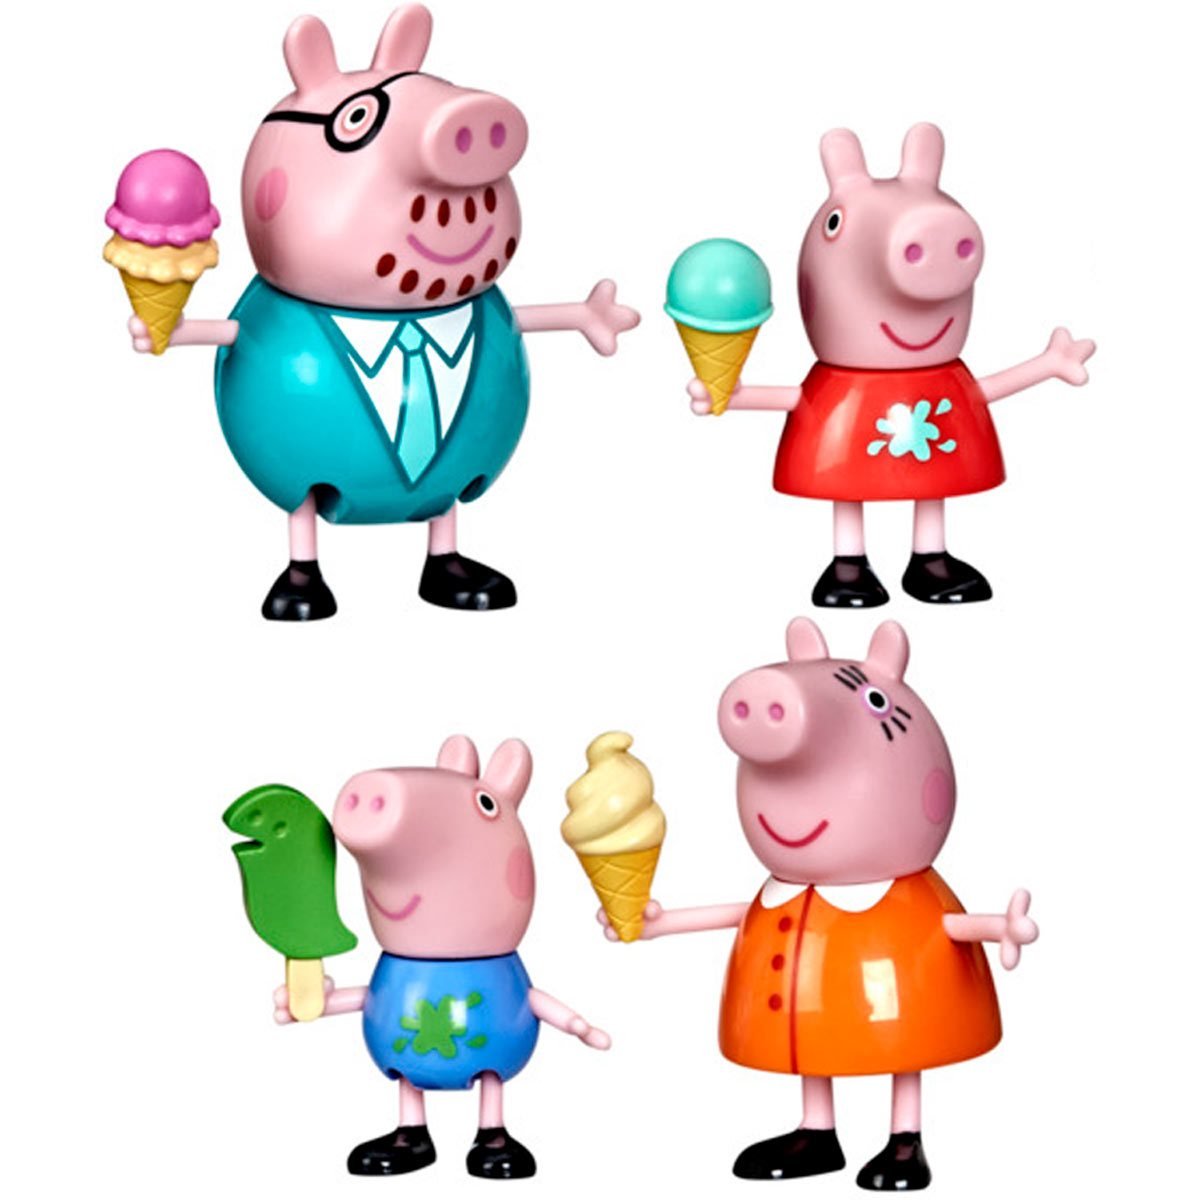 Peppa Pig Peppa's Adventures Peppa's Family Ice Cream Fun Mini-Figures